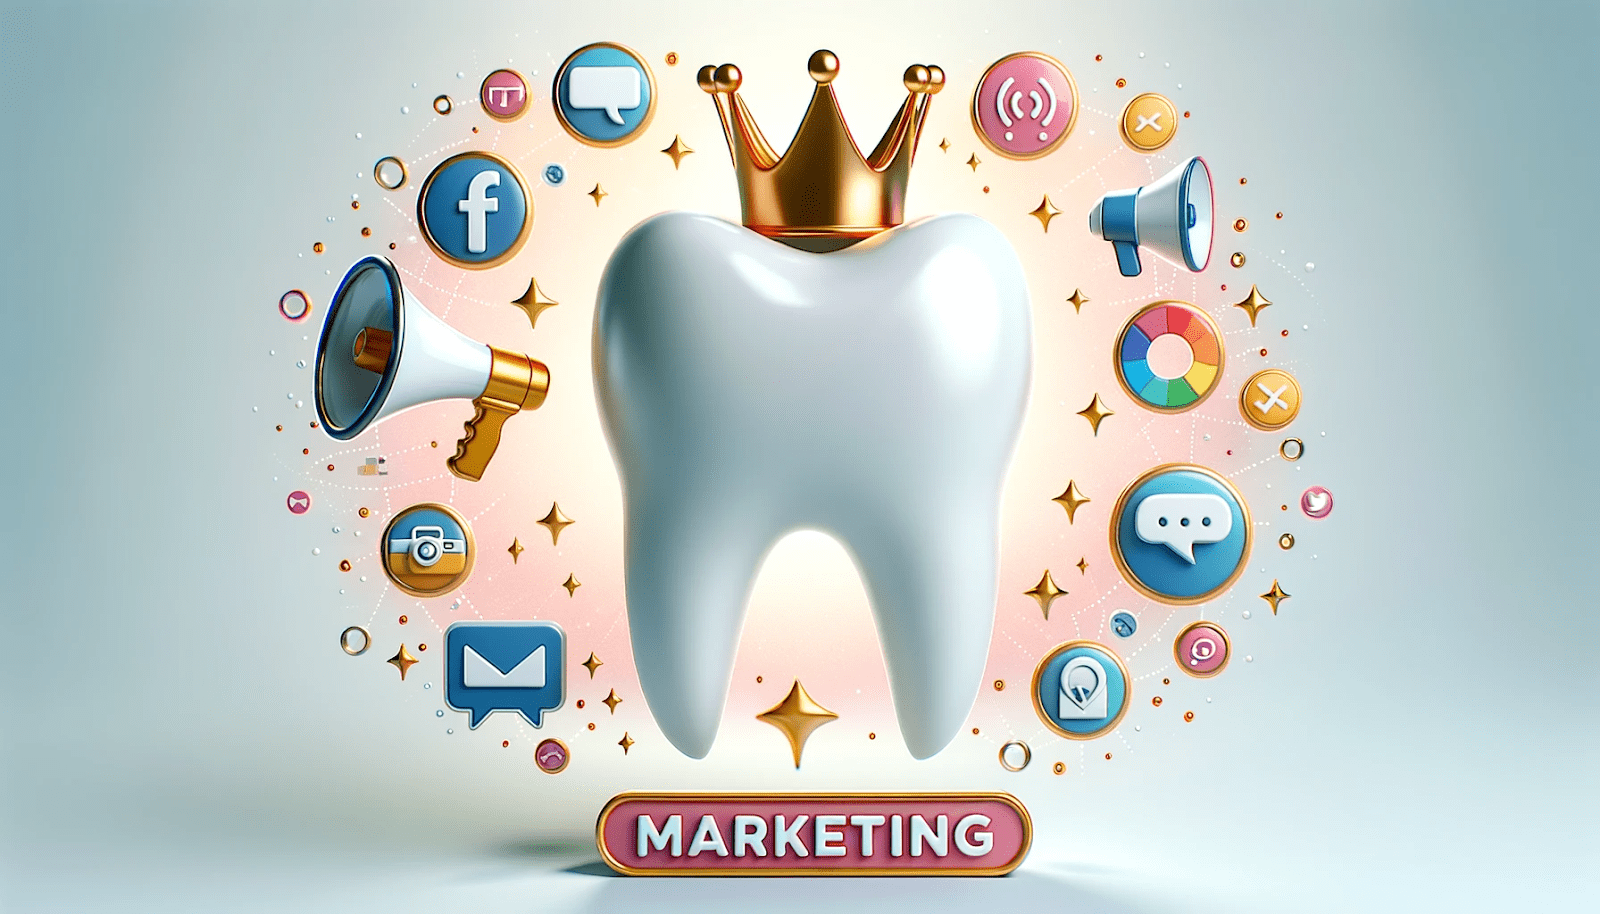 Dental implant marketing ideas for dentist